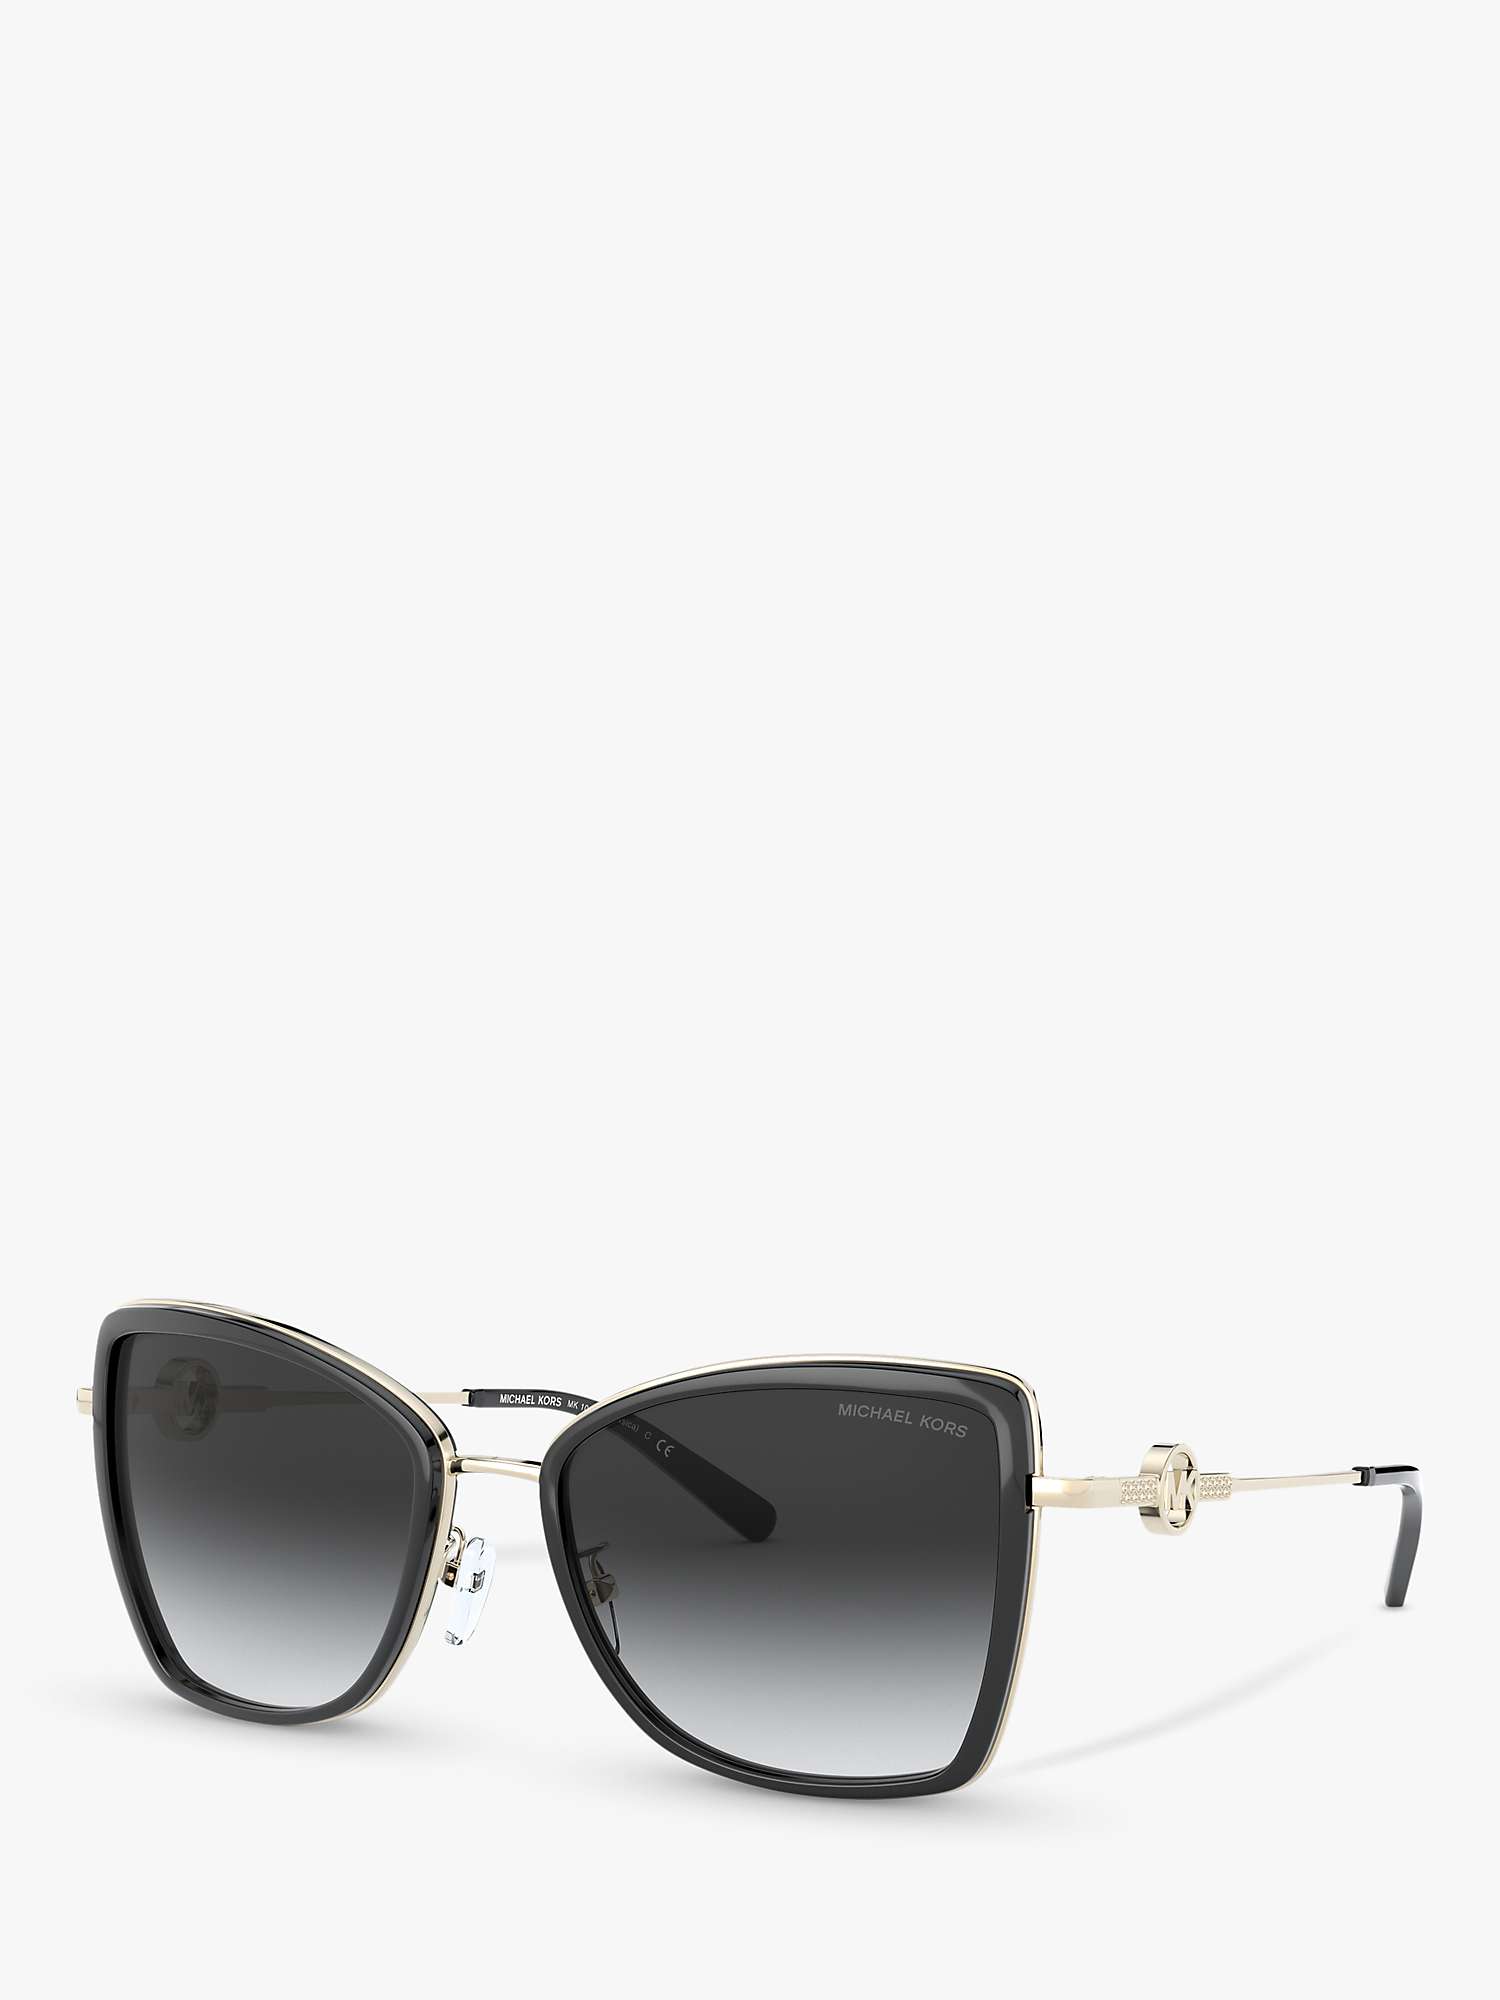 Buy Michael Kors MK1067B Women's Corsica Cat's Eye Sunglasses Online at johnlewis.com